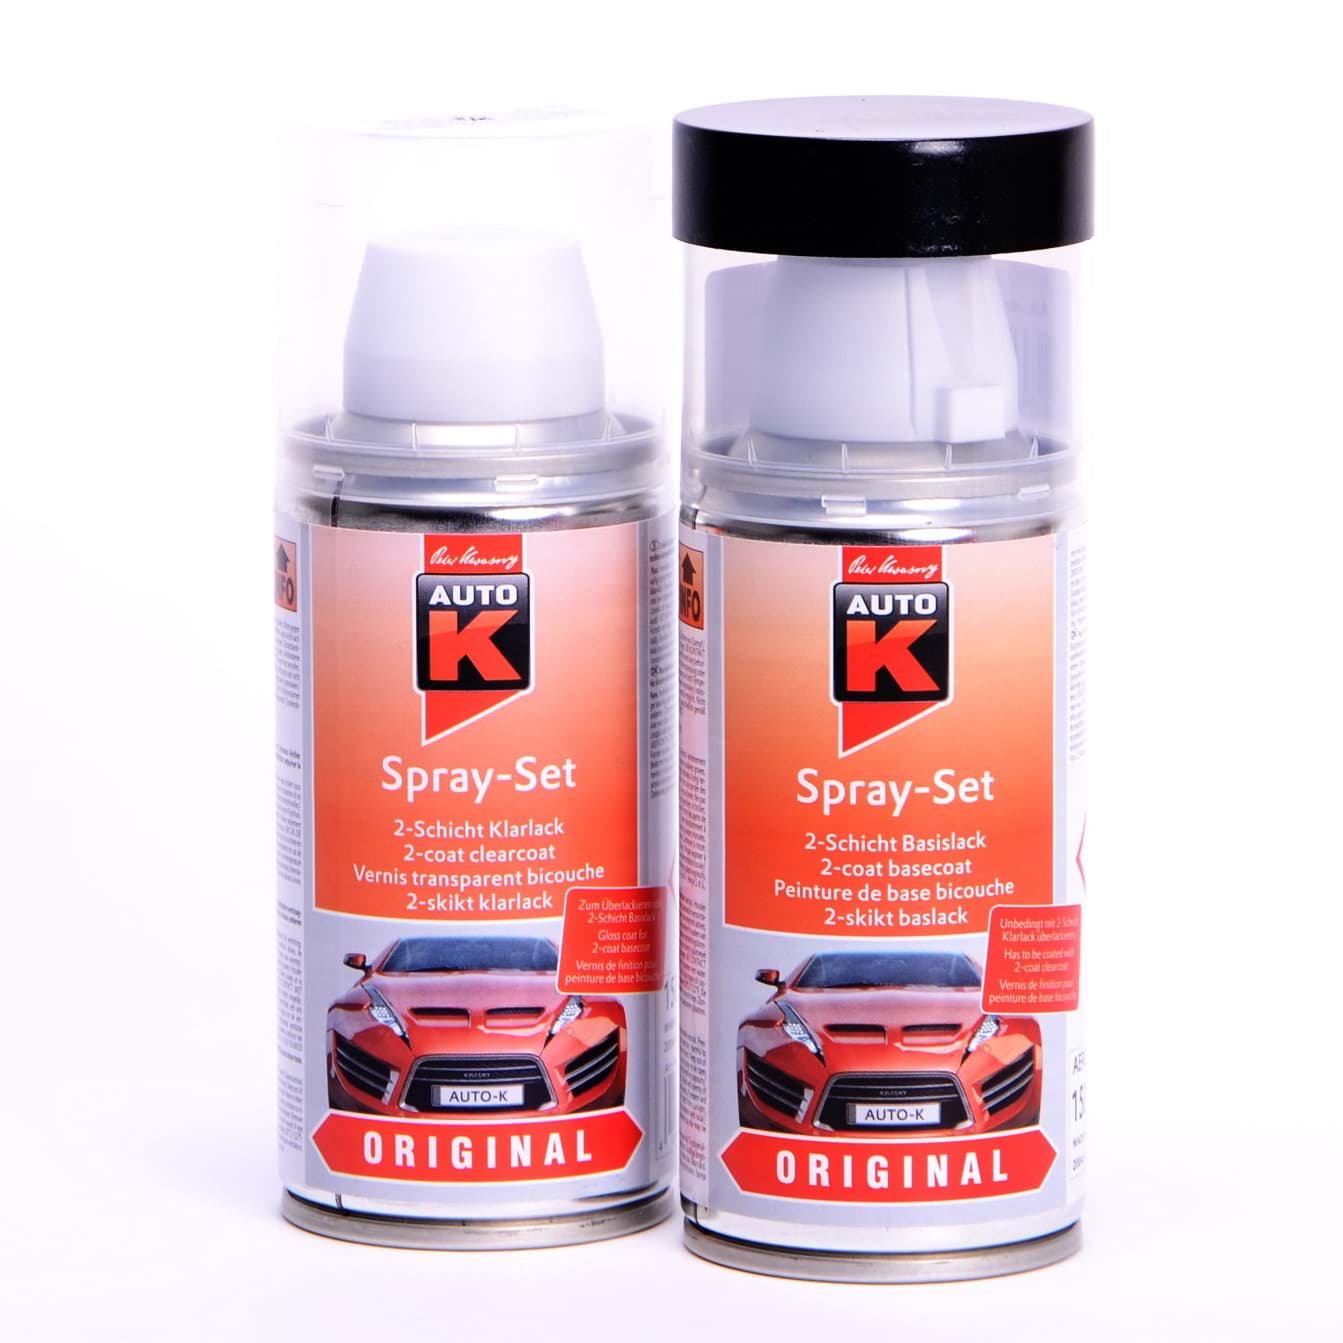 Изображение Auto-K Spray-Set Autolack für Peugeot KMF Bleu Recife Nacre met 42370